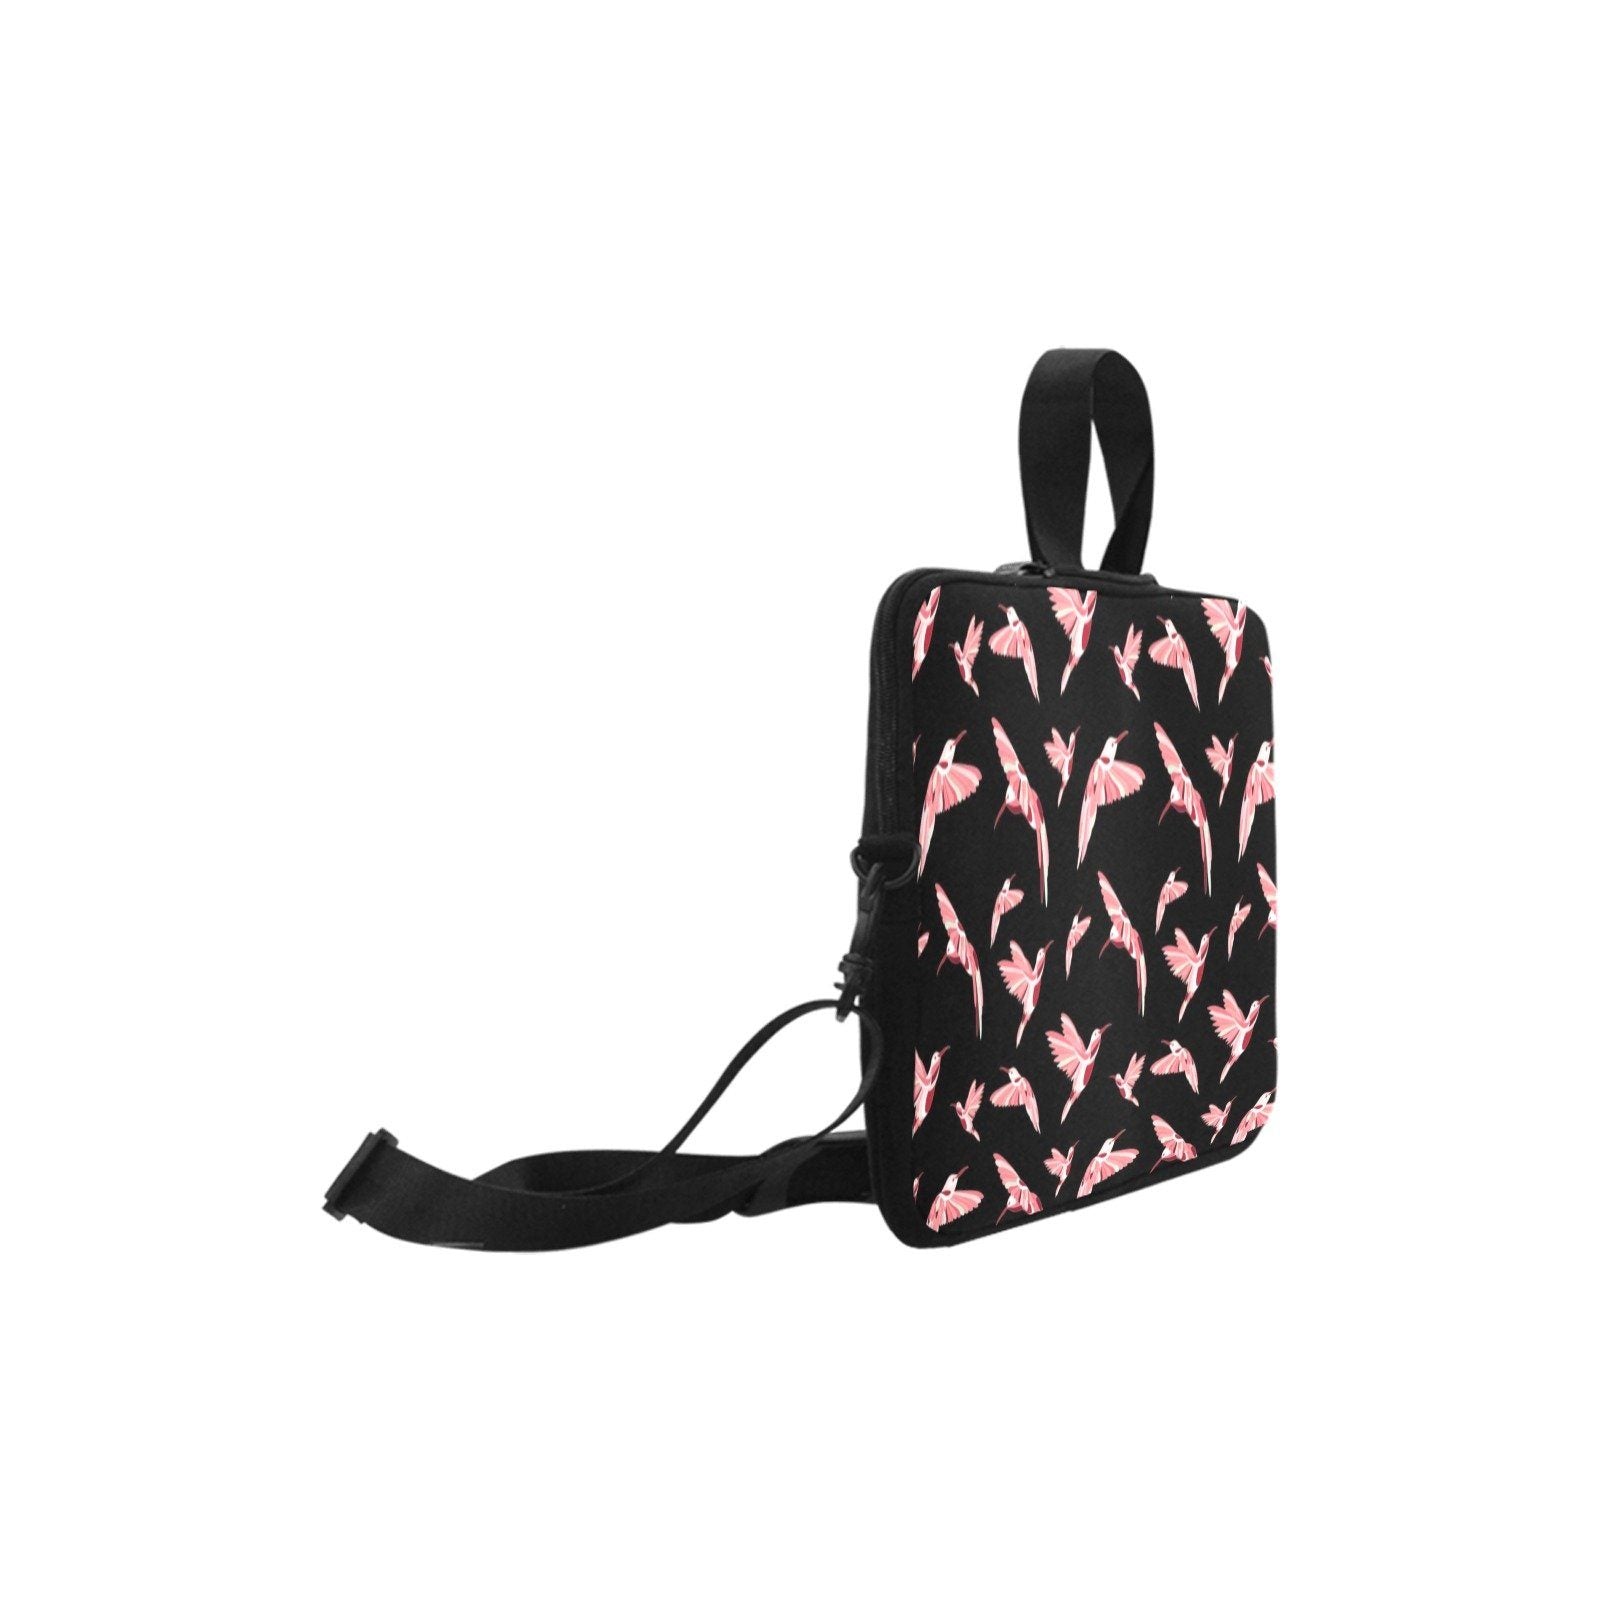 Strawberry Black Laptop Handbags 15" Laptop Handbags 15" e-joyer 